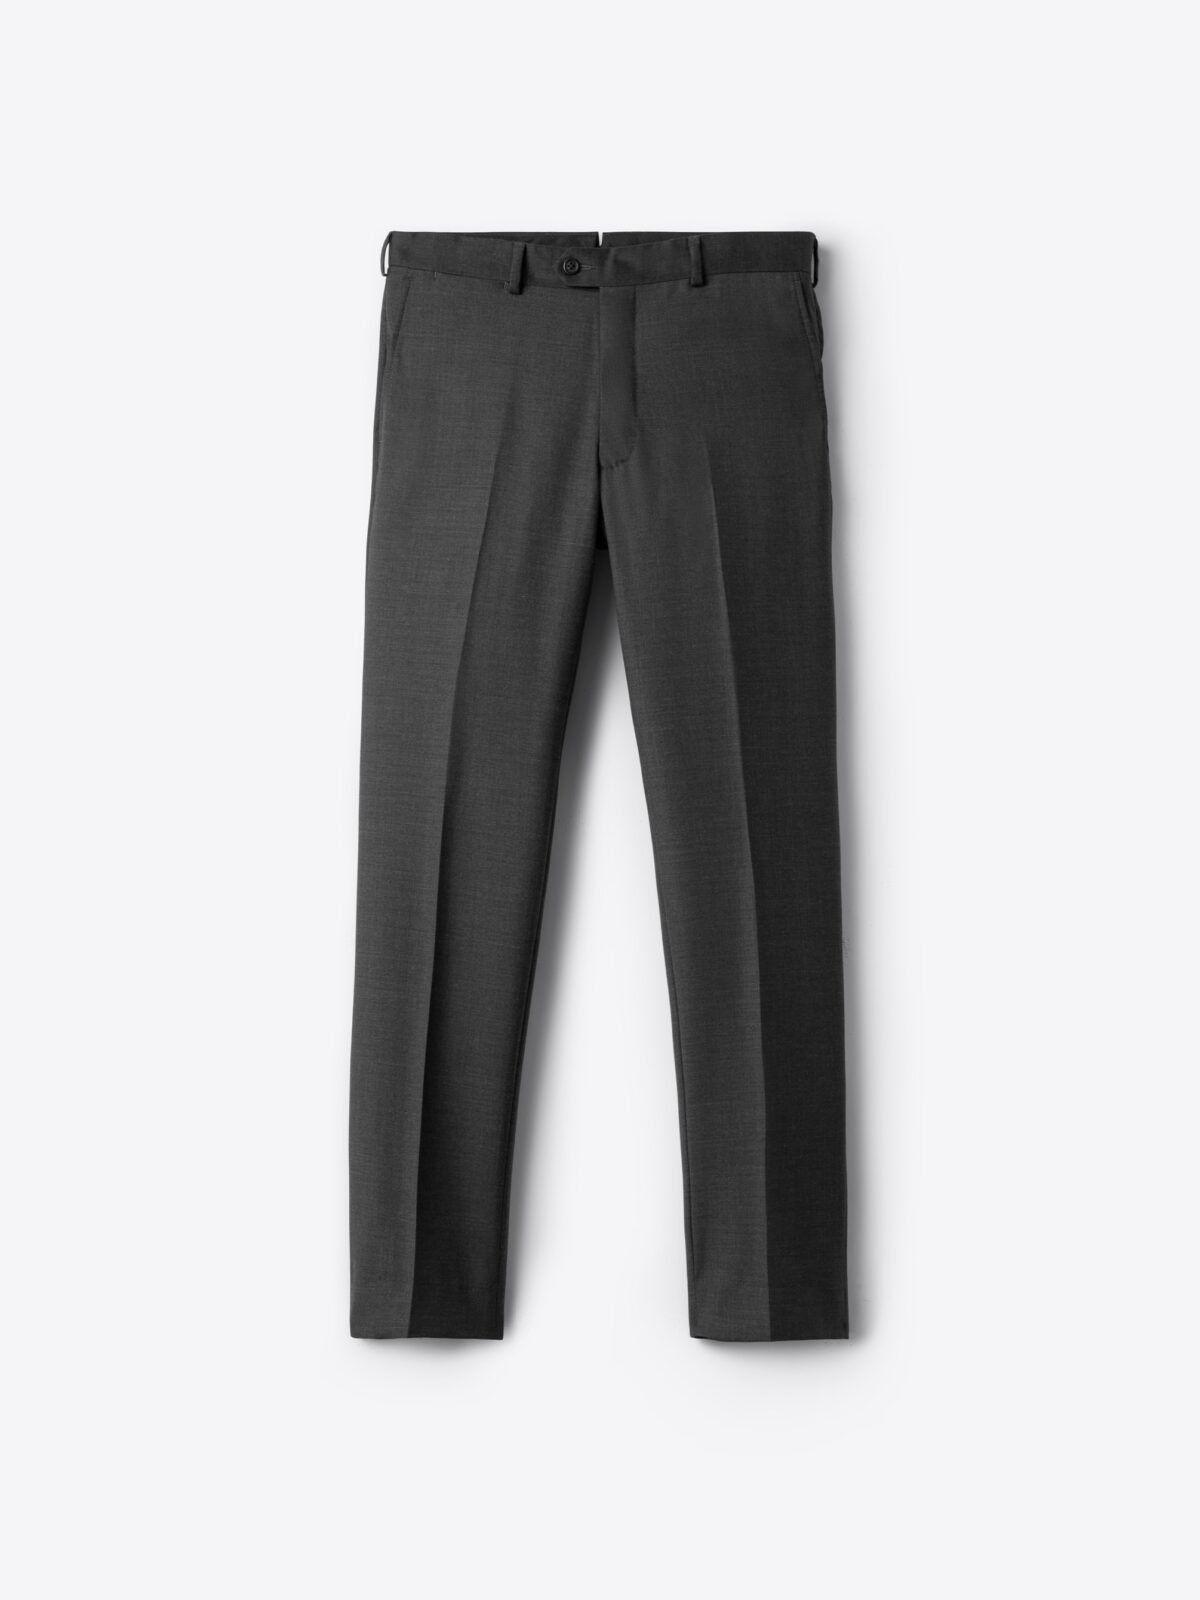 Men Cotton Pants Straight Leg Trousers Pockets Work Slim Summer Thin Plain  | eBay